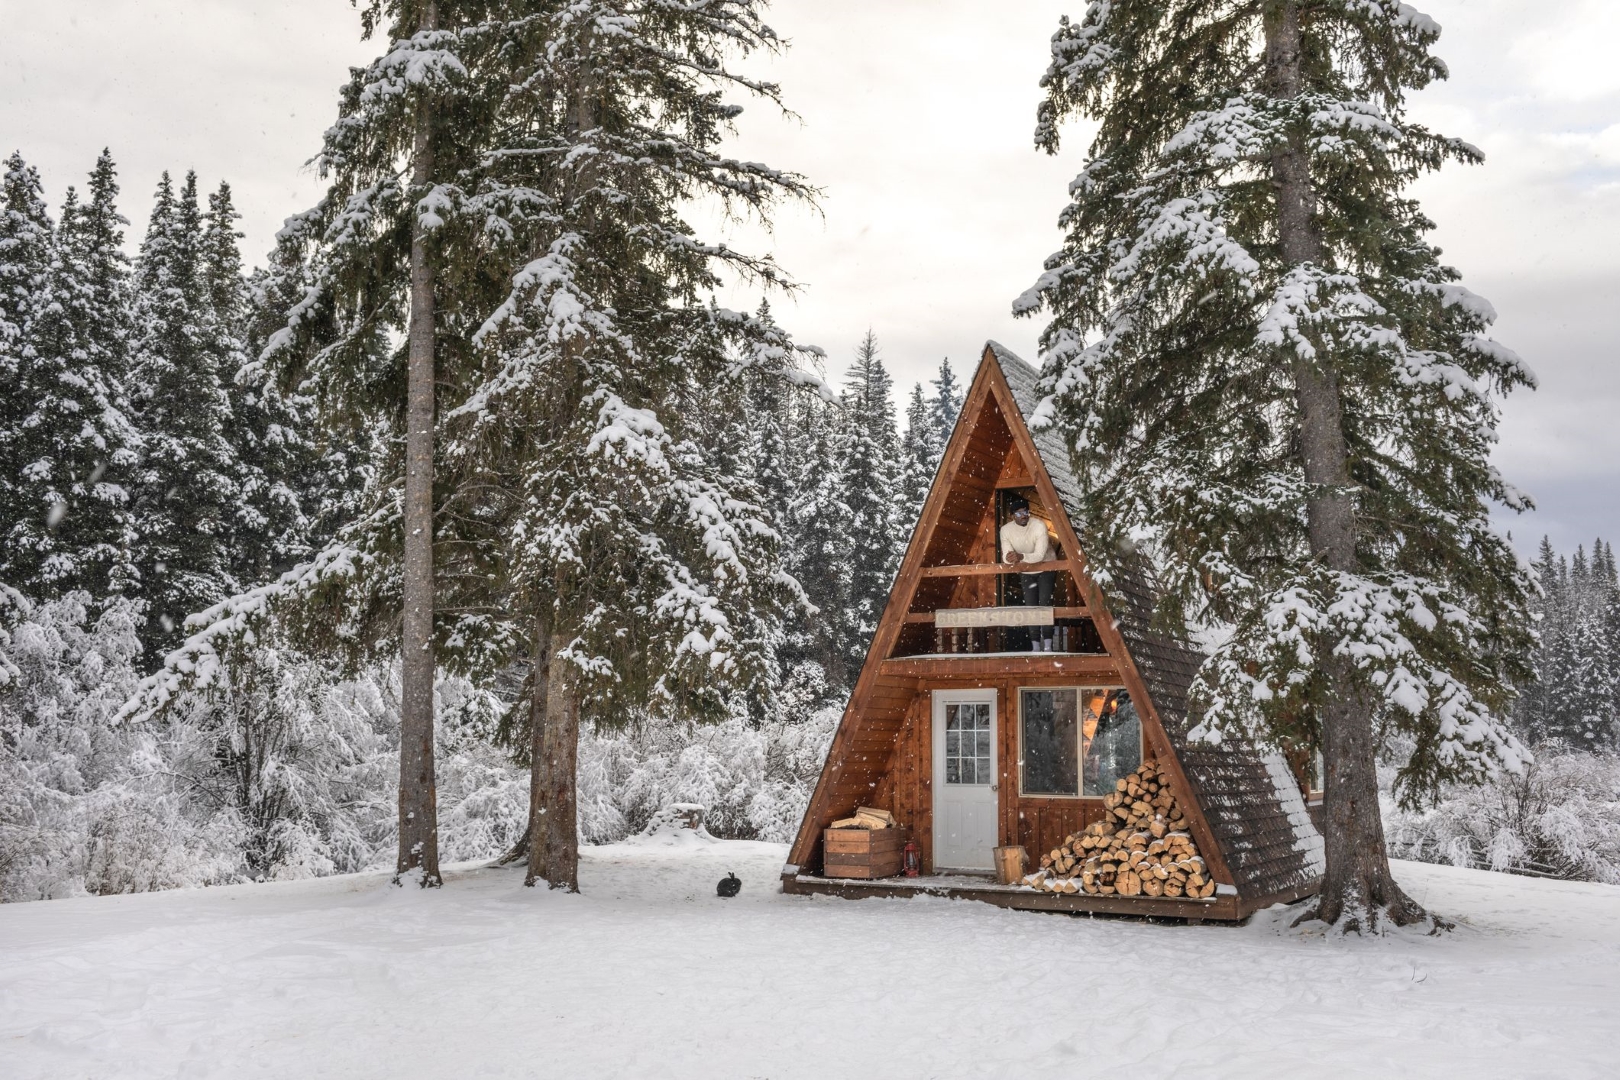 A-frame mountain cabin in a snowy landscape